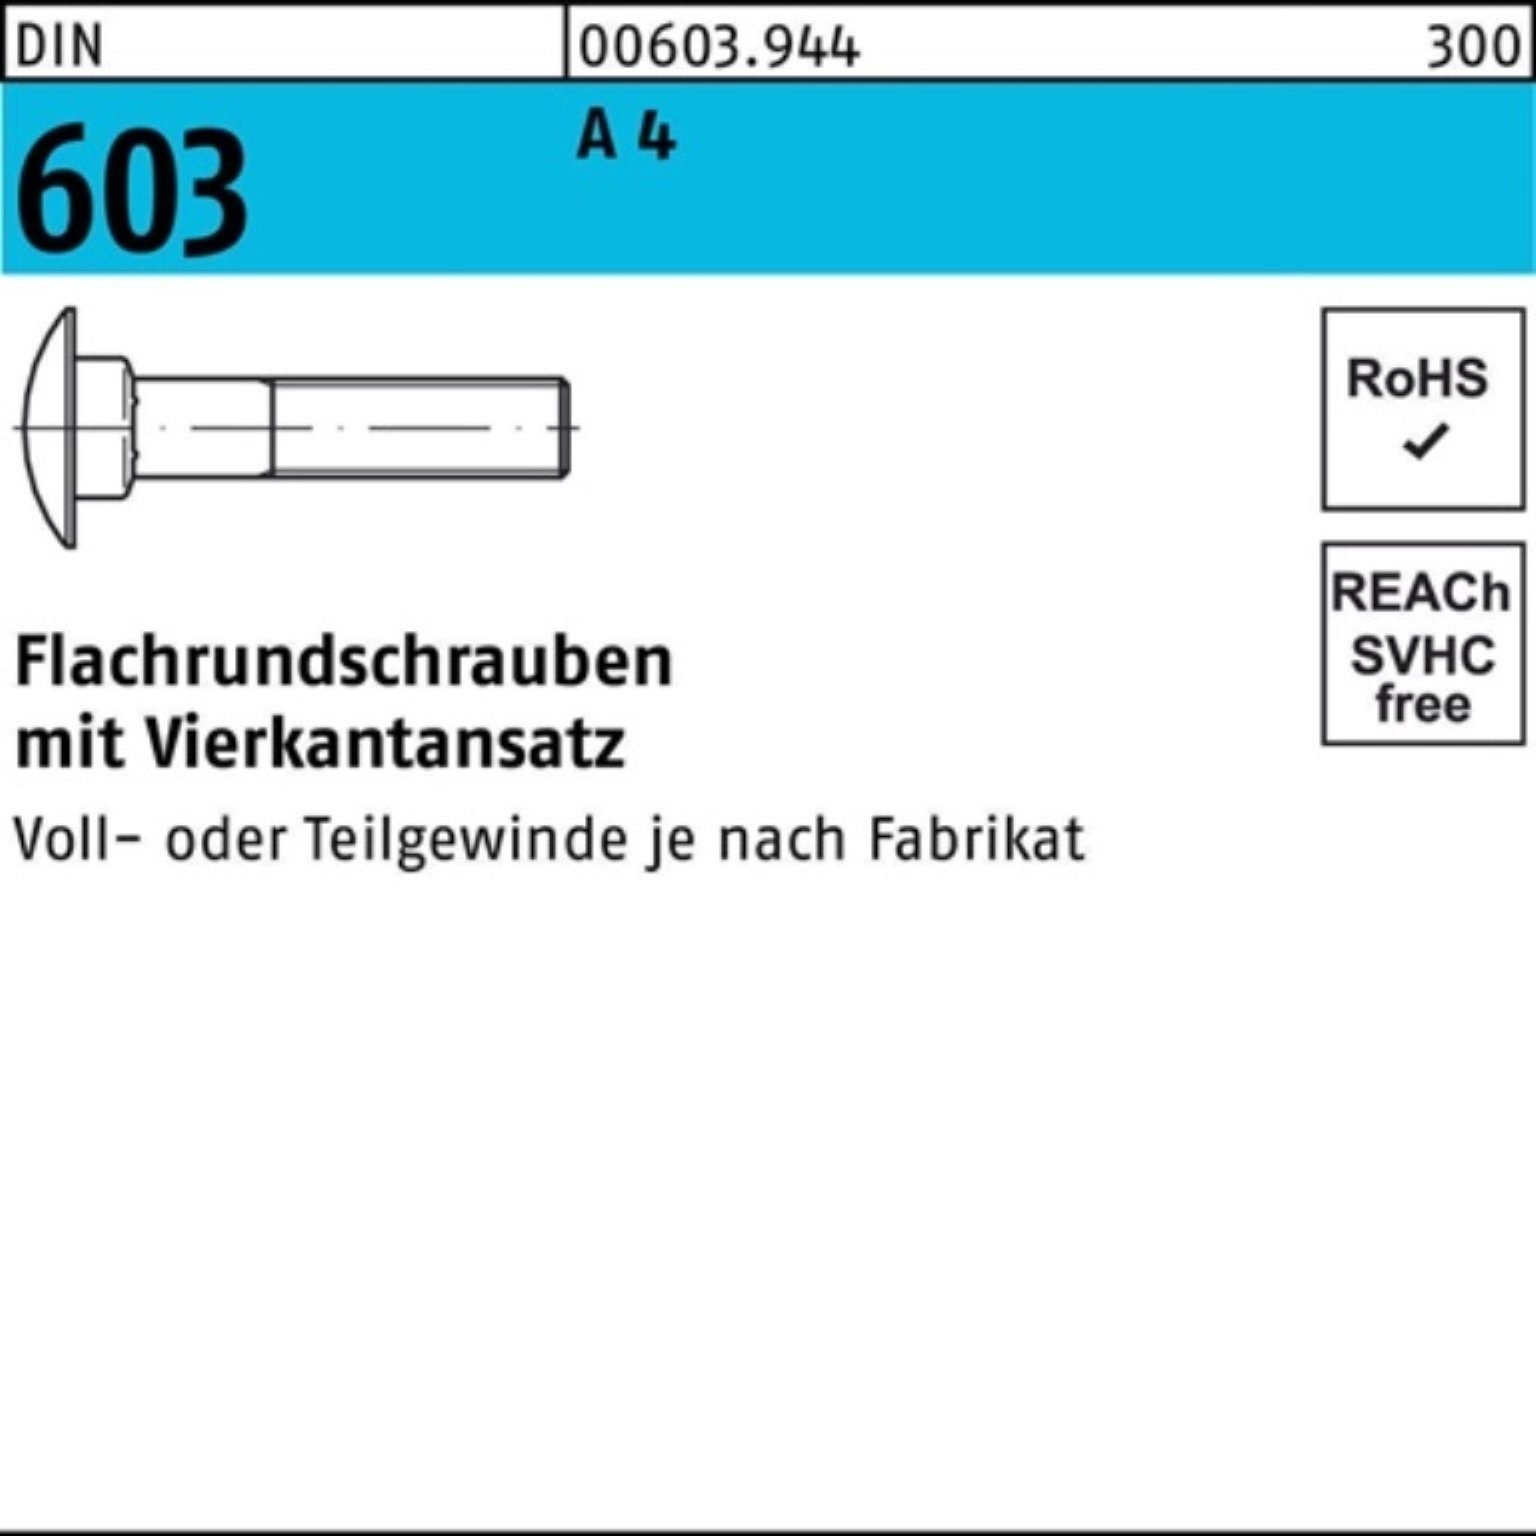 Reyher Schraube 100er Pack Flachrundschraube DIN 603 Vierkantansatz M10x 60 A 4 10 St